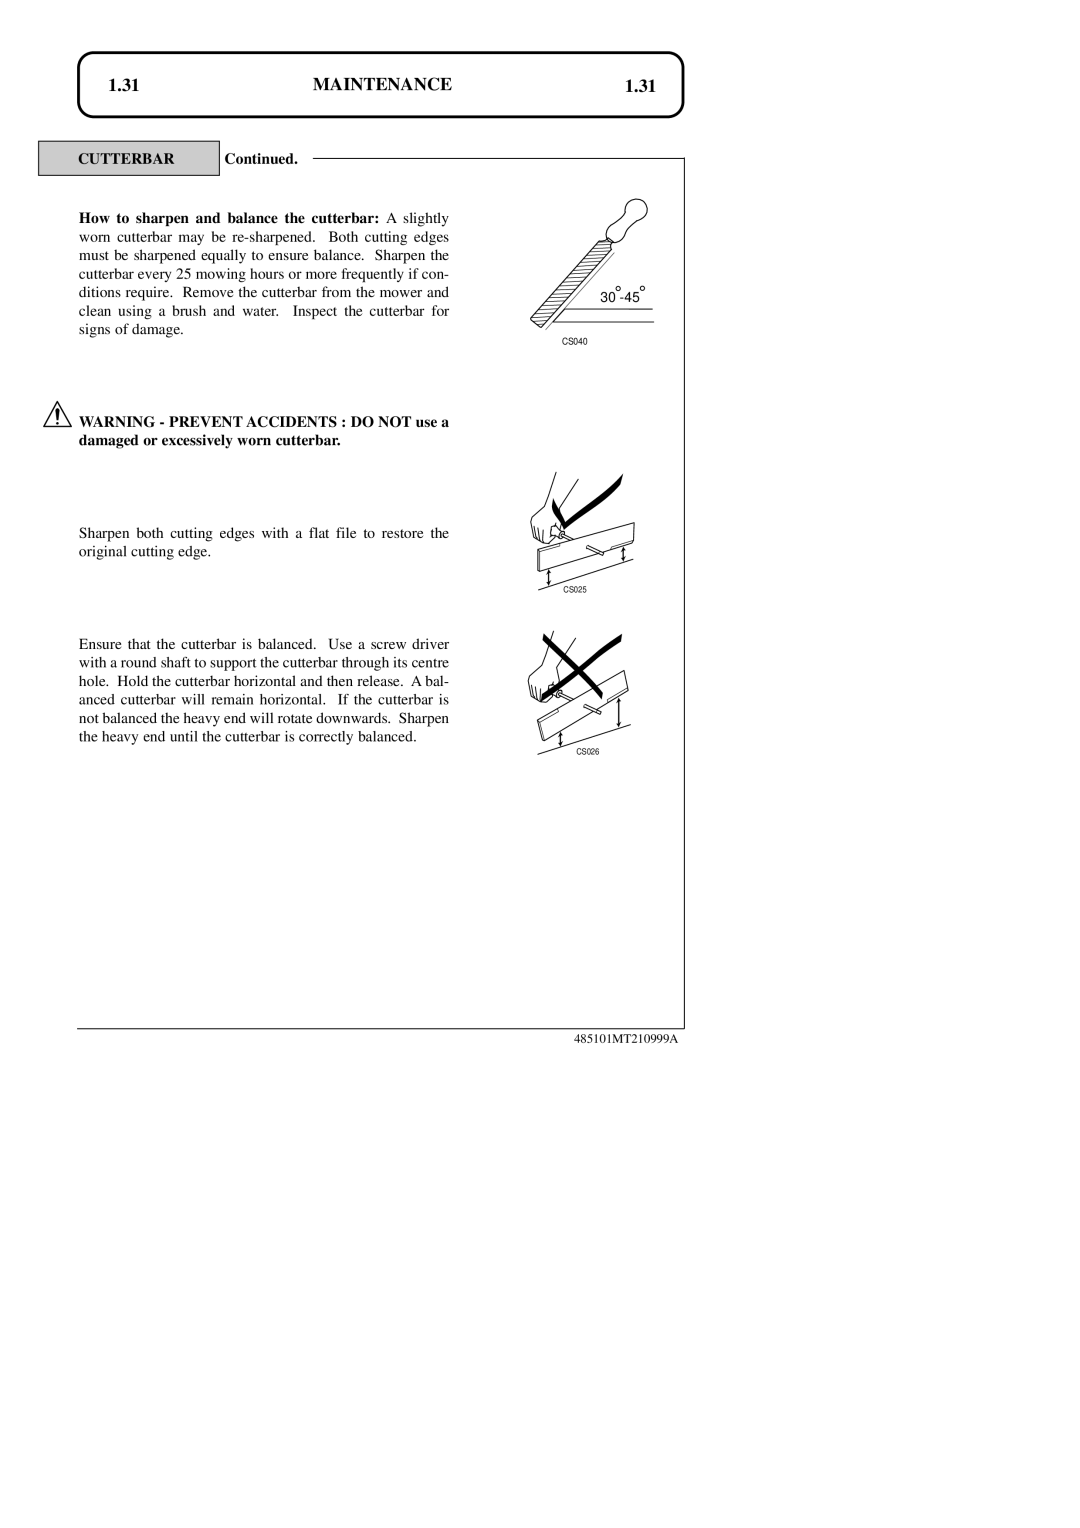 Hayter Mowers 48ST manual 1.31, Maintenance, Continued, CS040 